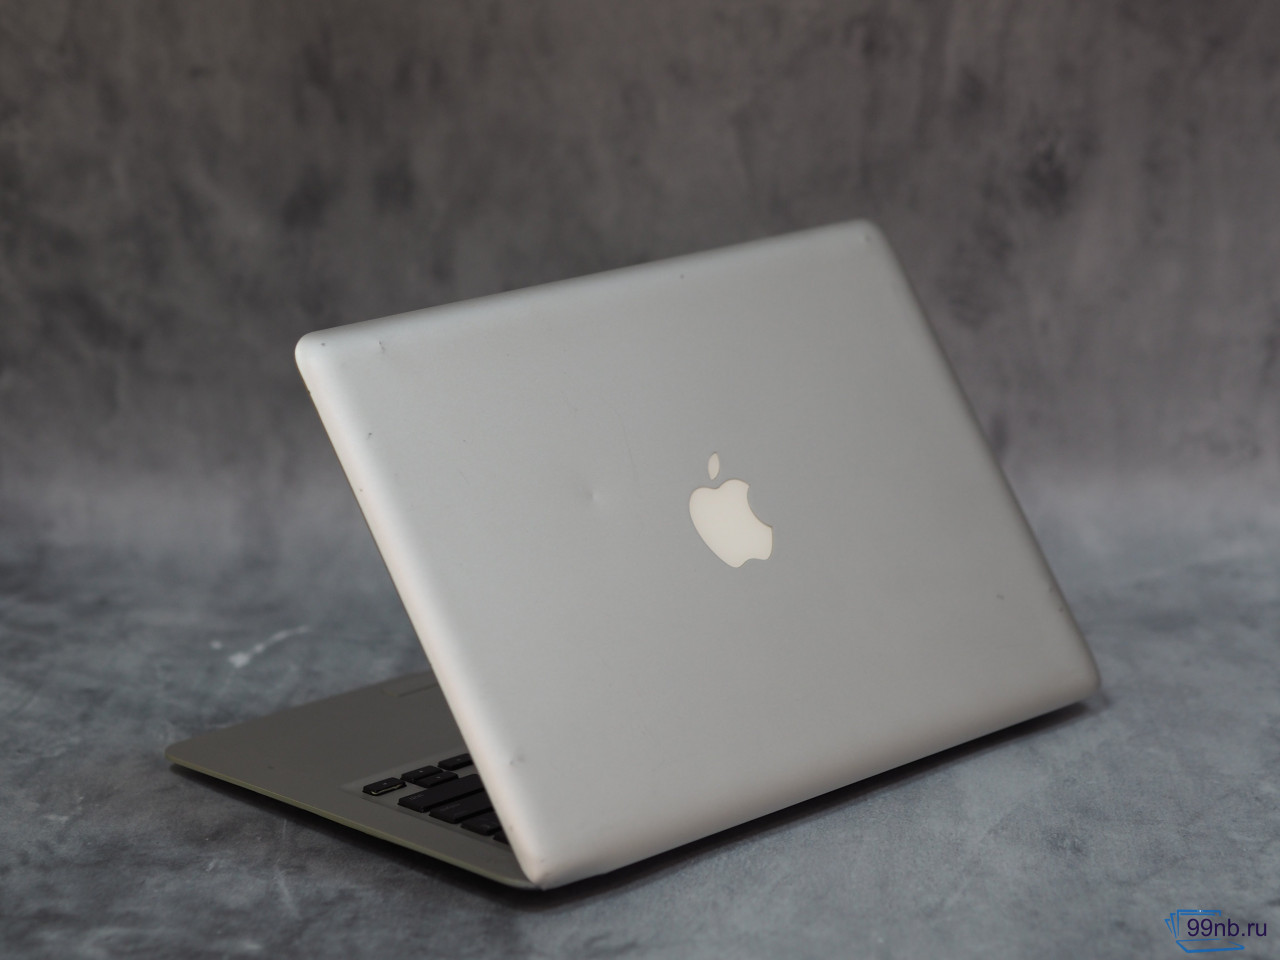 Macbook mac air 2008